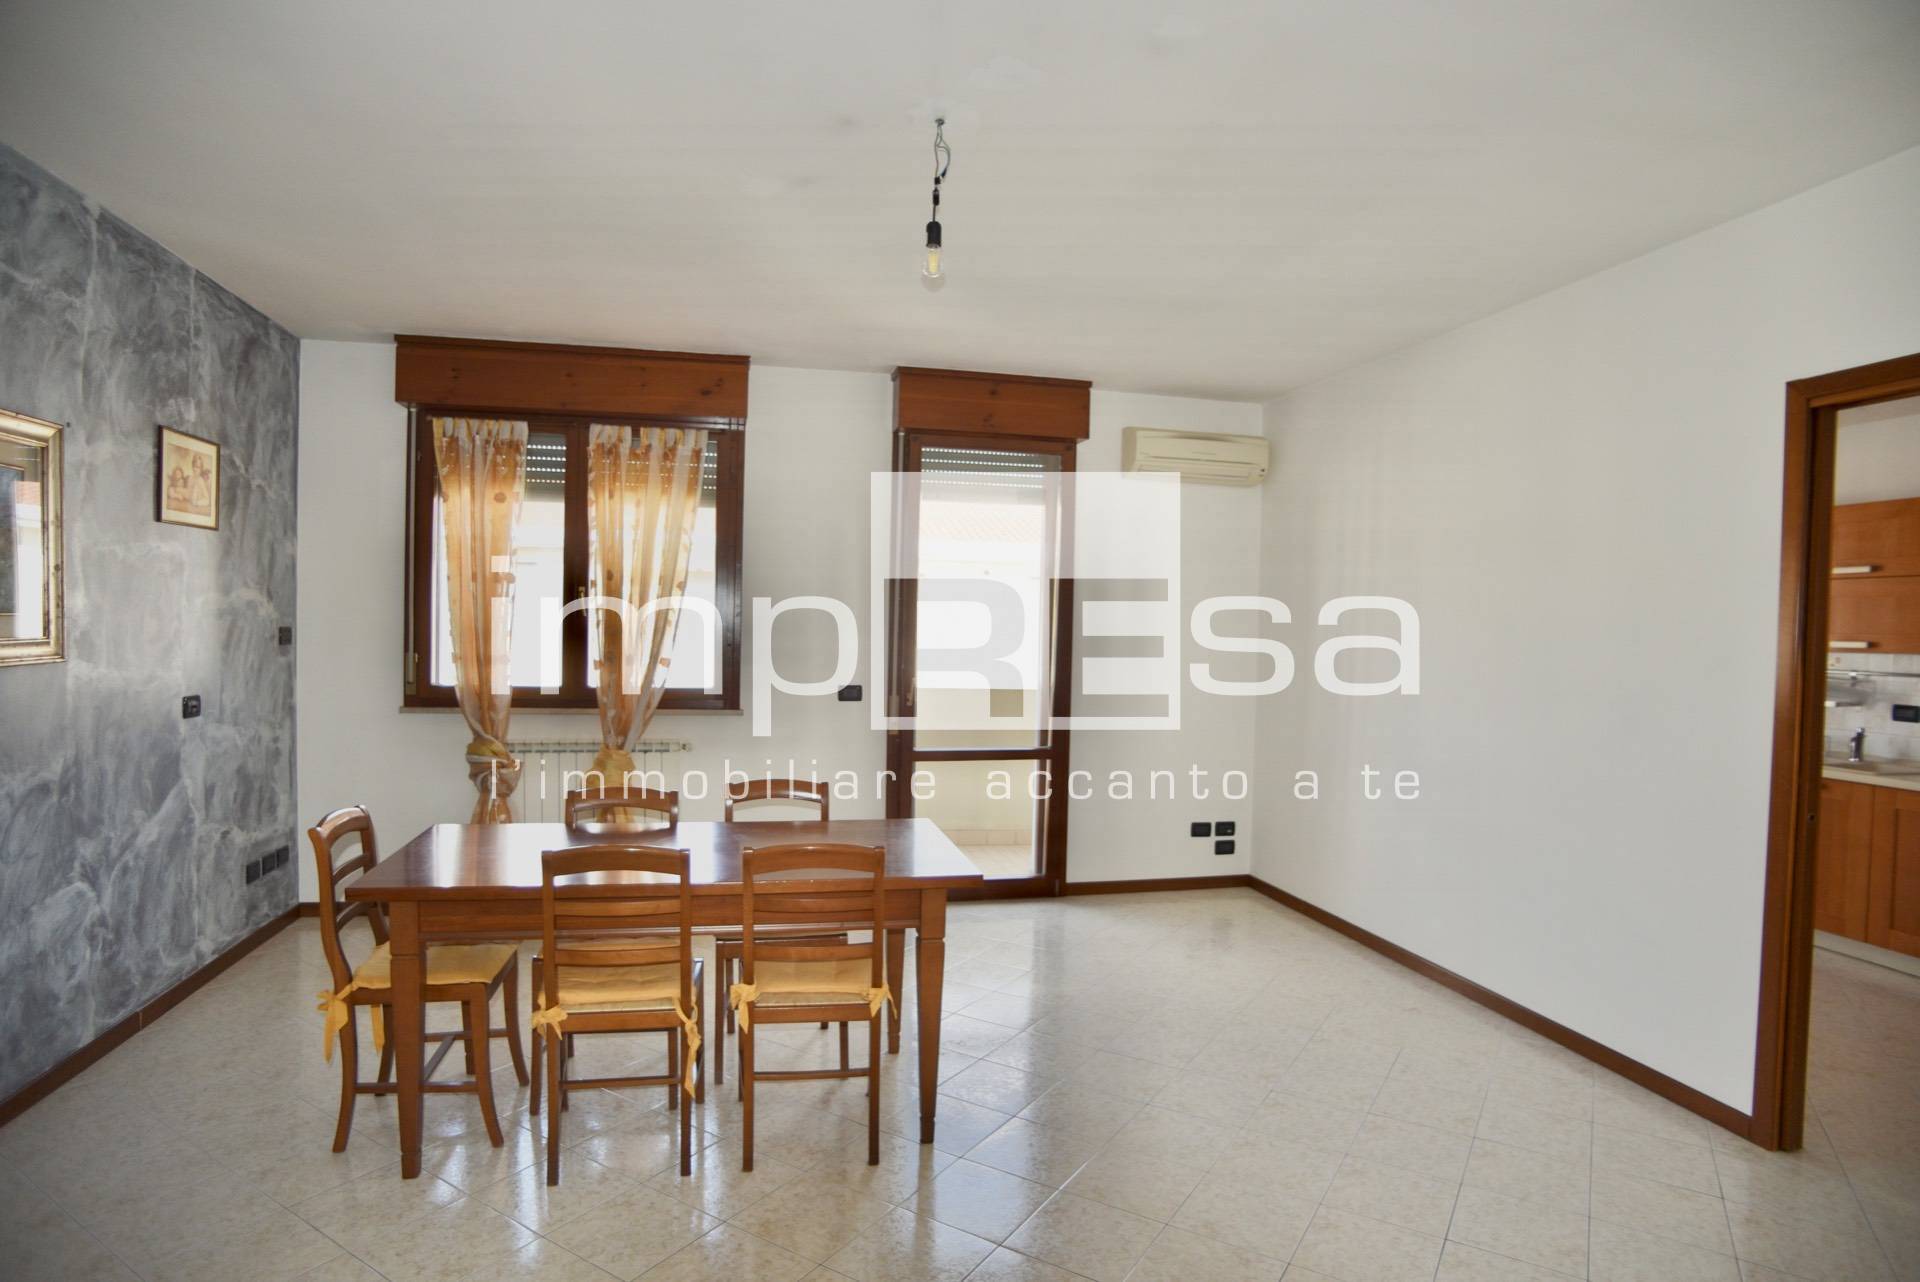 Appartamento in vendita a Ghirada, Treviso (TV)